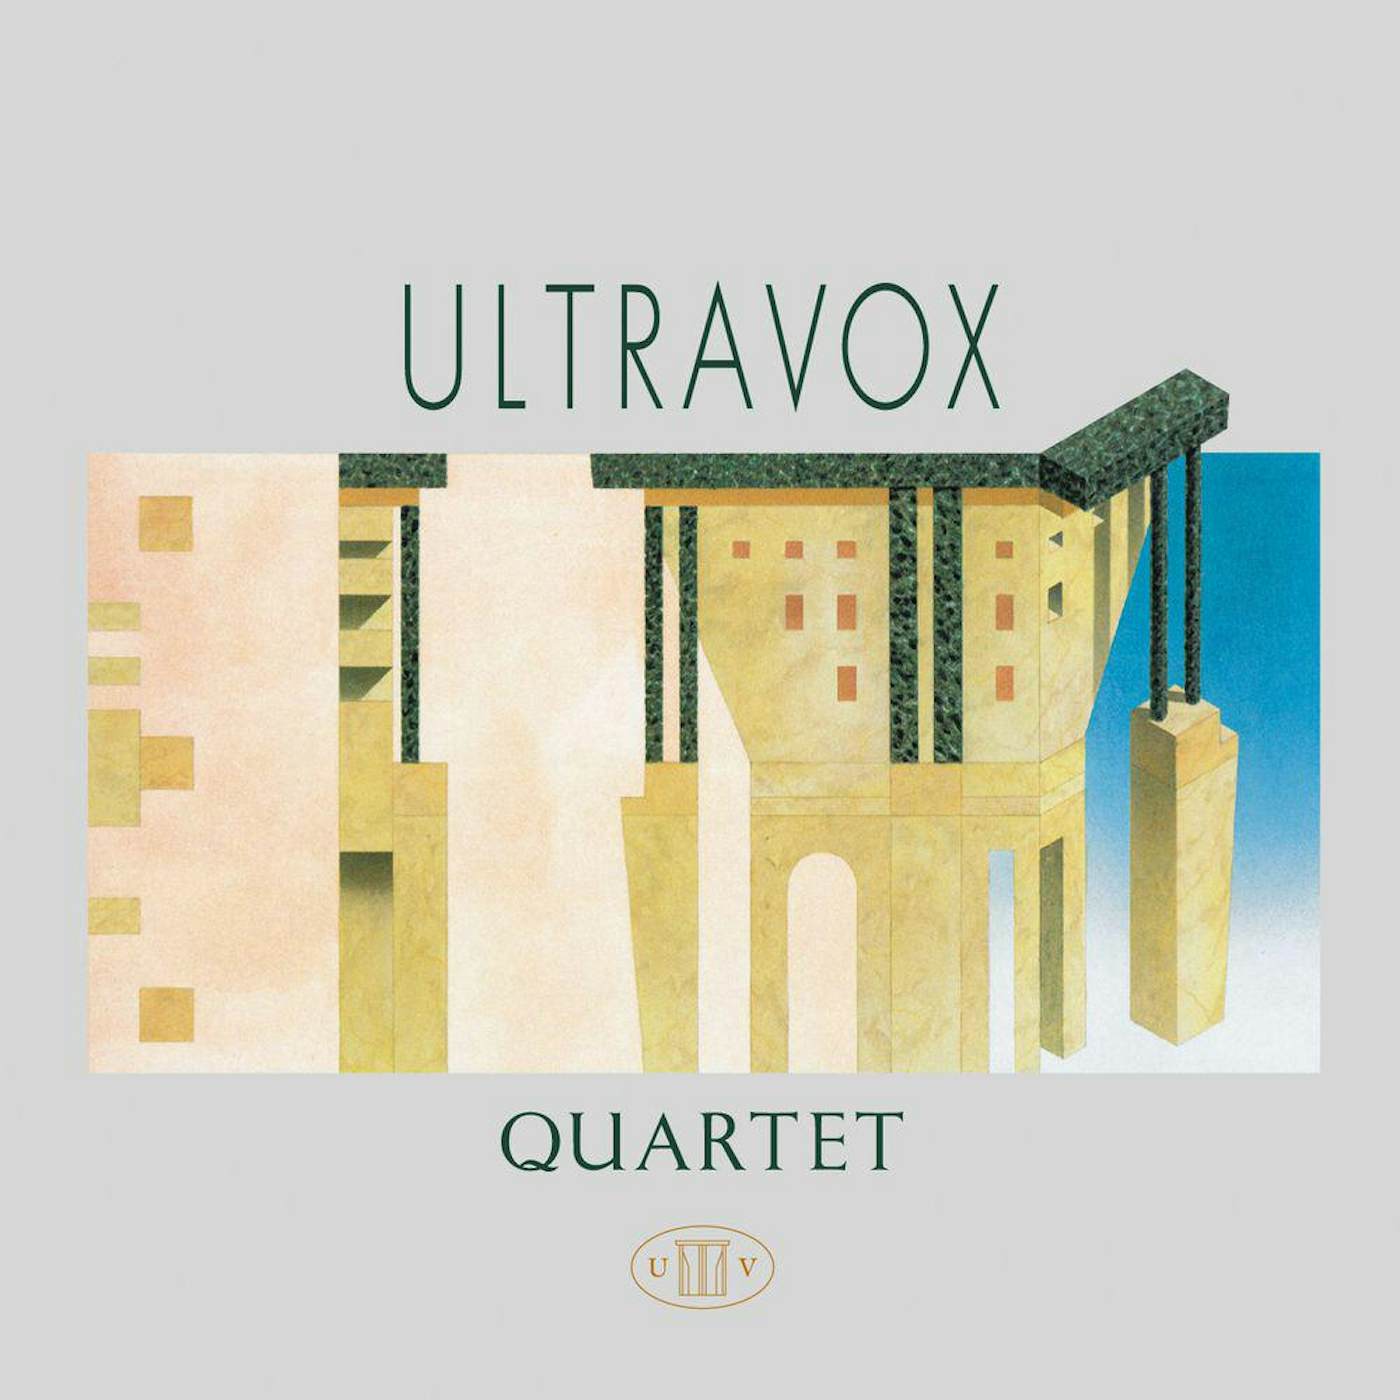 Ultravox Quartet (Deluxe Edition/Clear) Vinyl Record